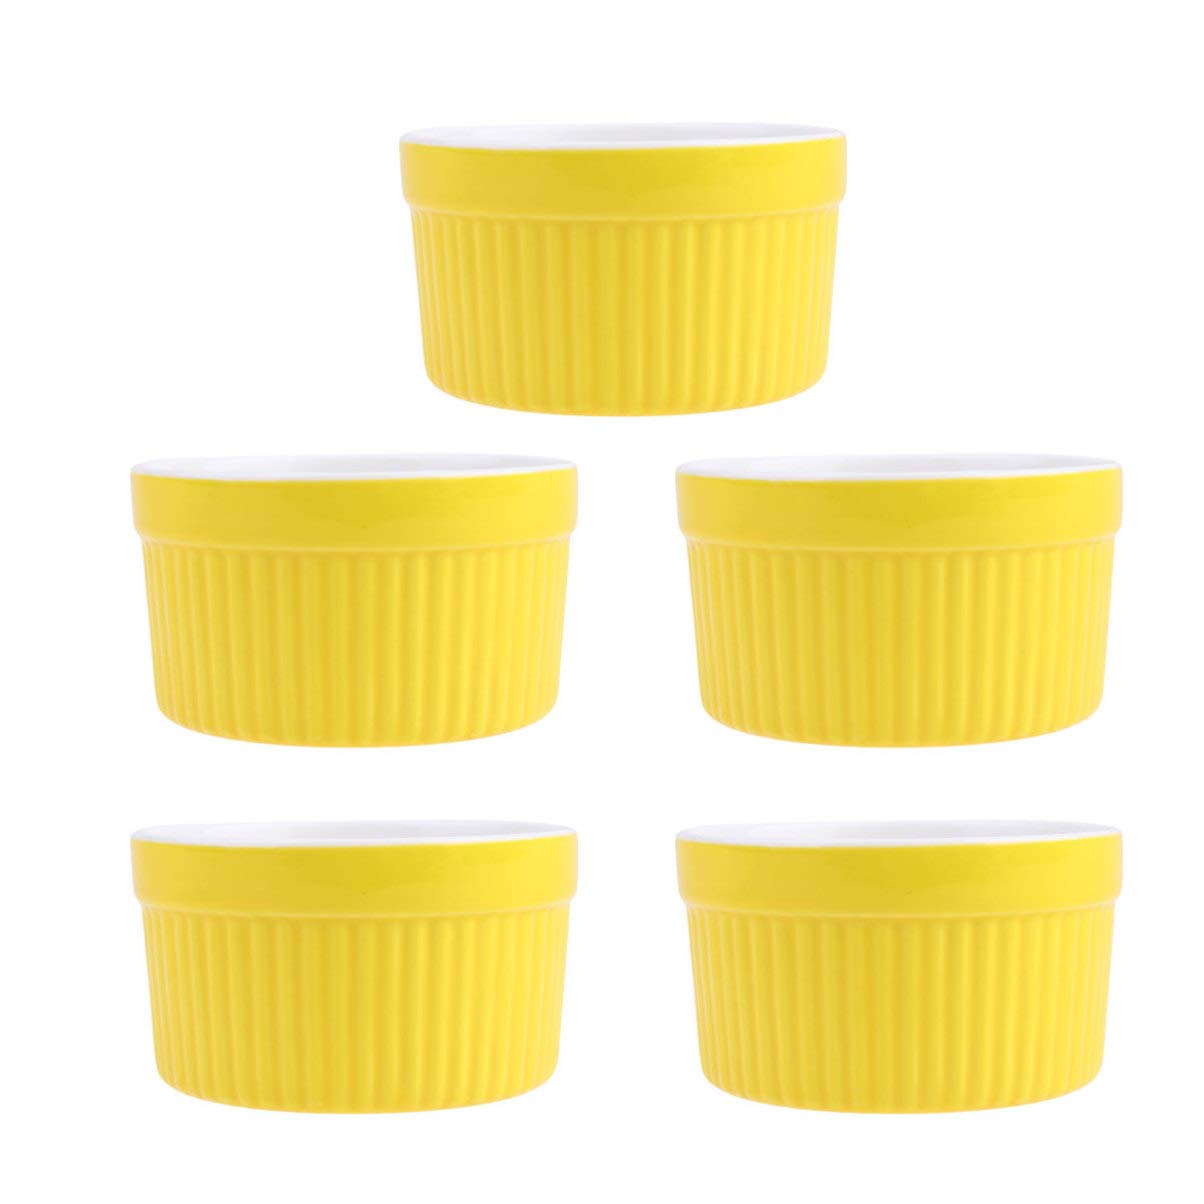 PRETYZOOM Ceramic Ramekins Porcelain Dishes Dessert Custard Baking Cup Round Ceramic Pudding Cup Bowl Ramekins Bakeware for Baking Serving Creme Brulee Lava Cake 5pcs